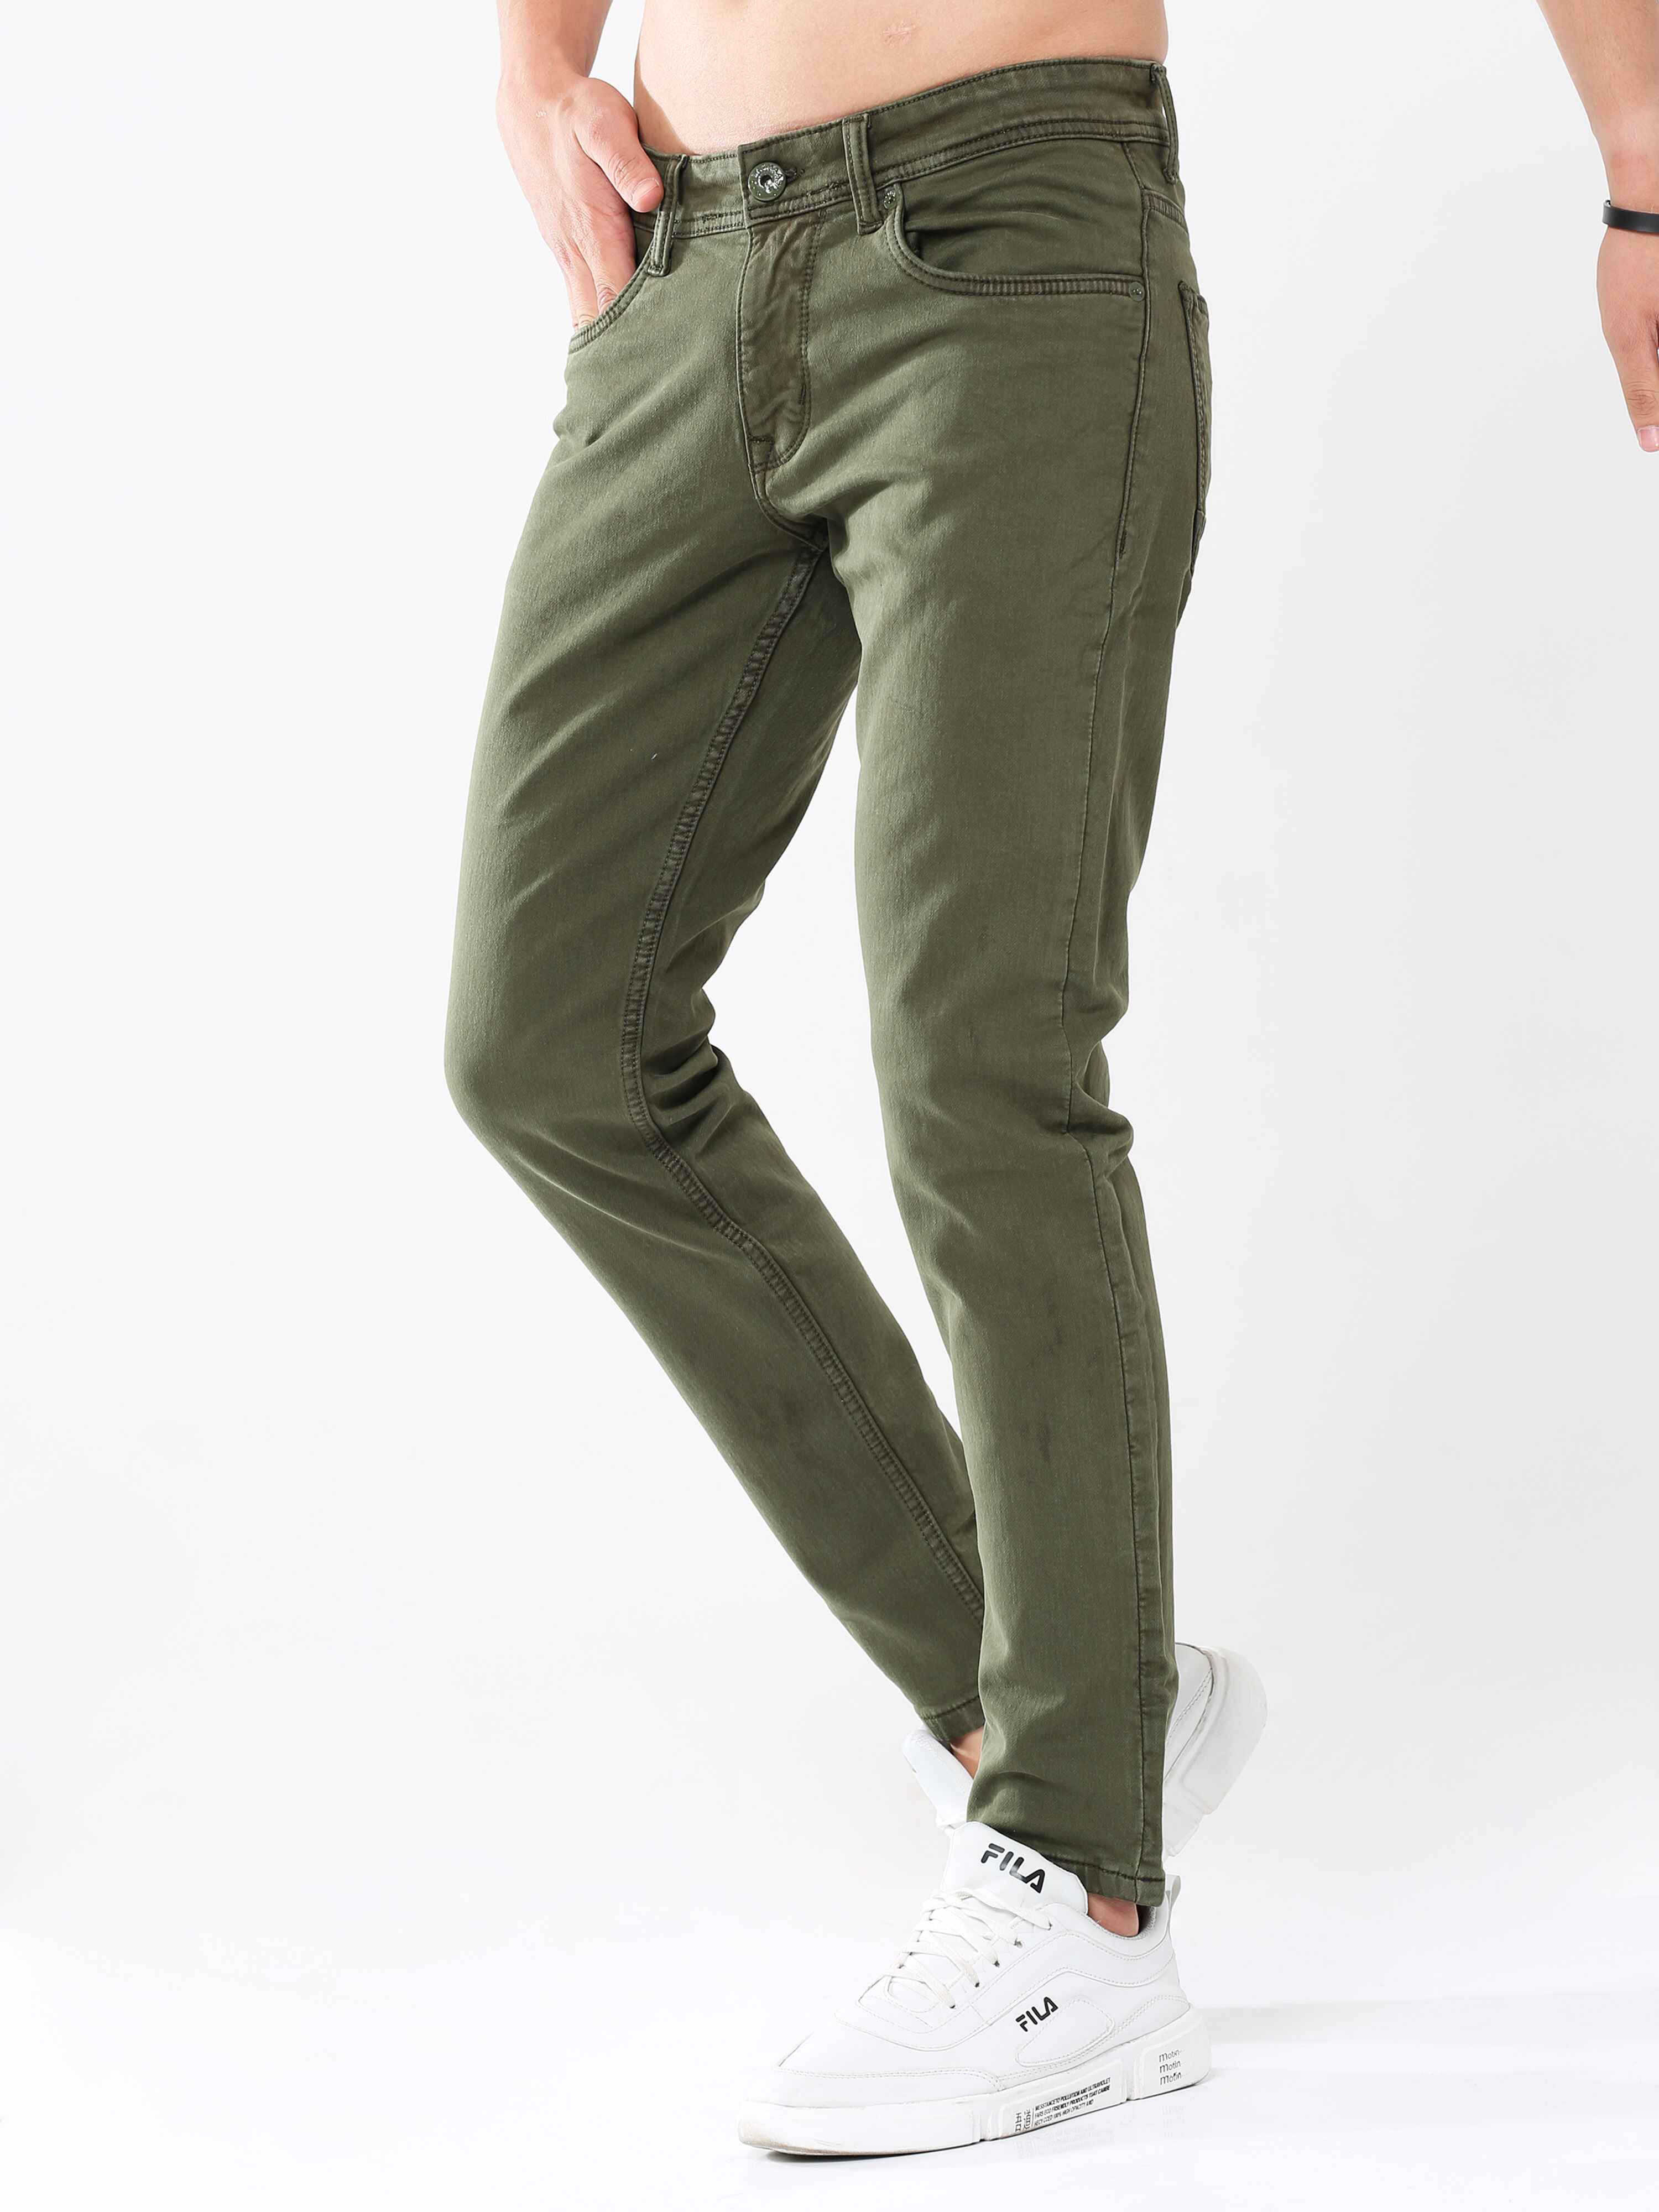 Guniper Green Skinny Jeans